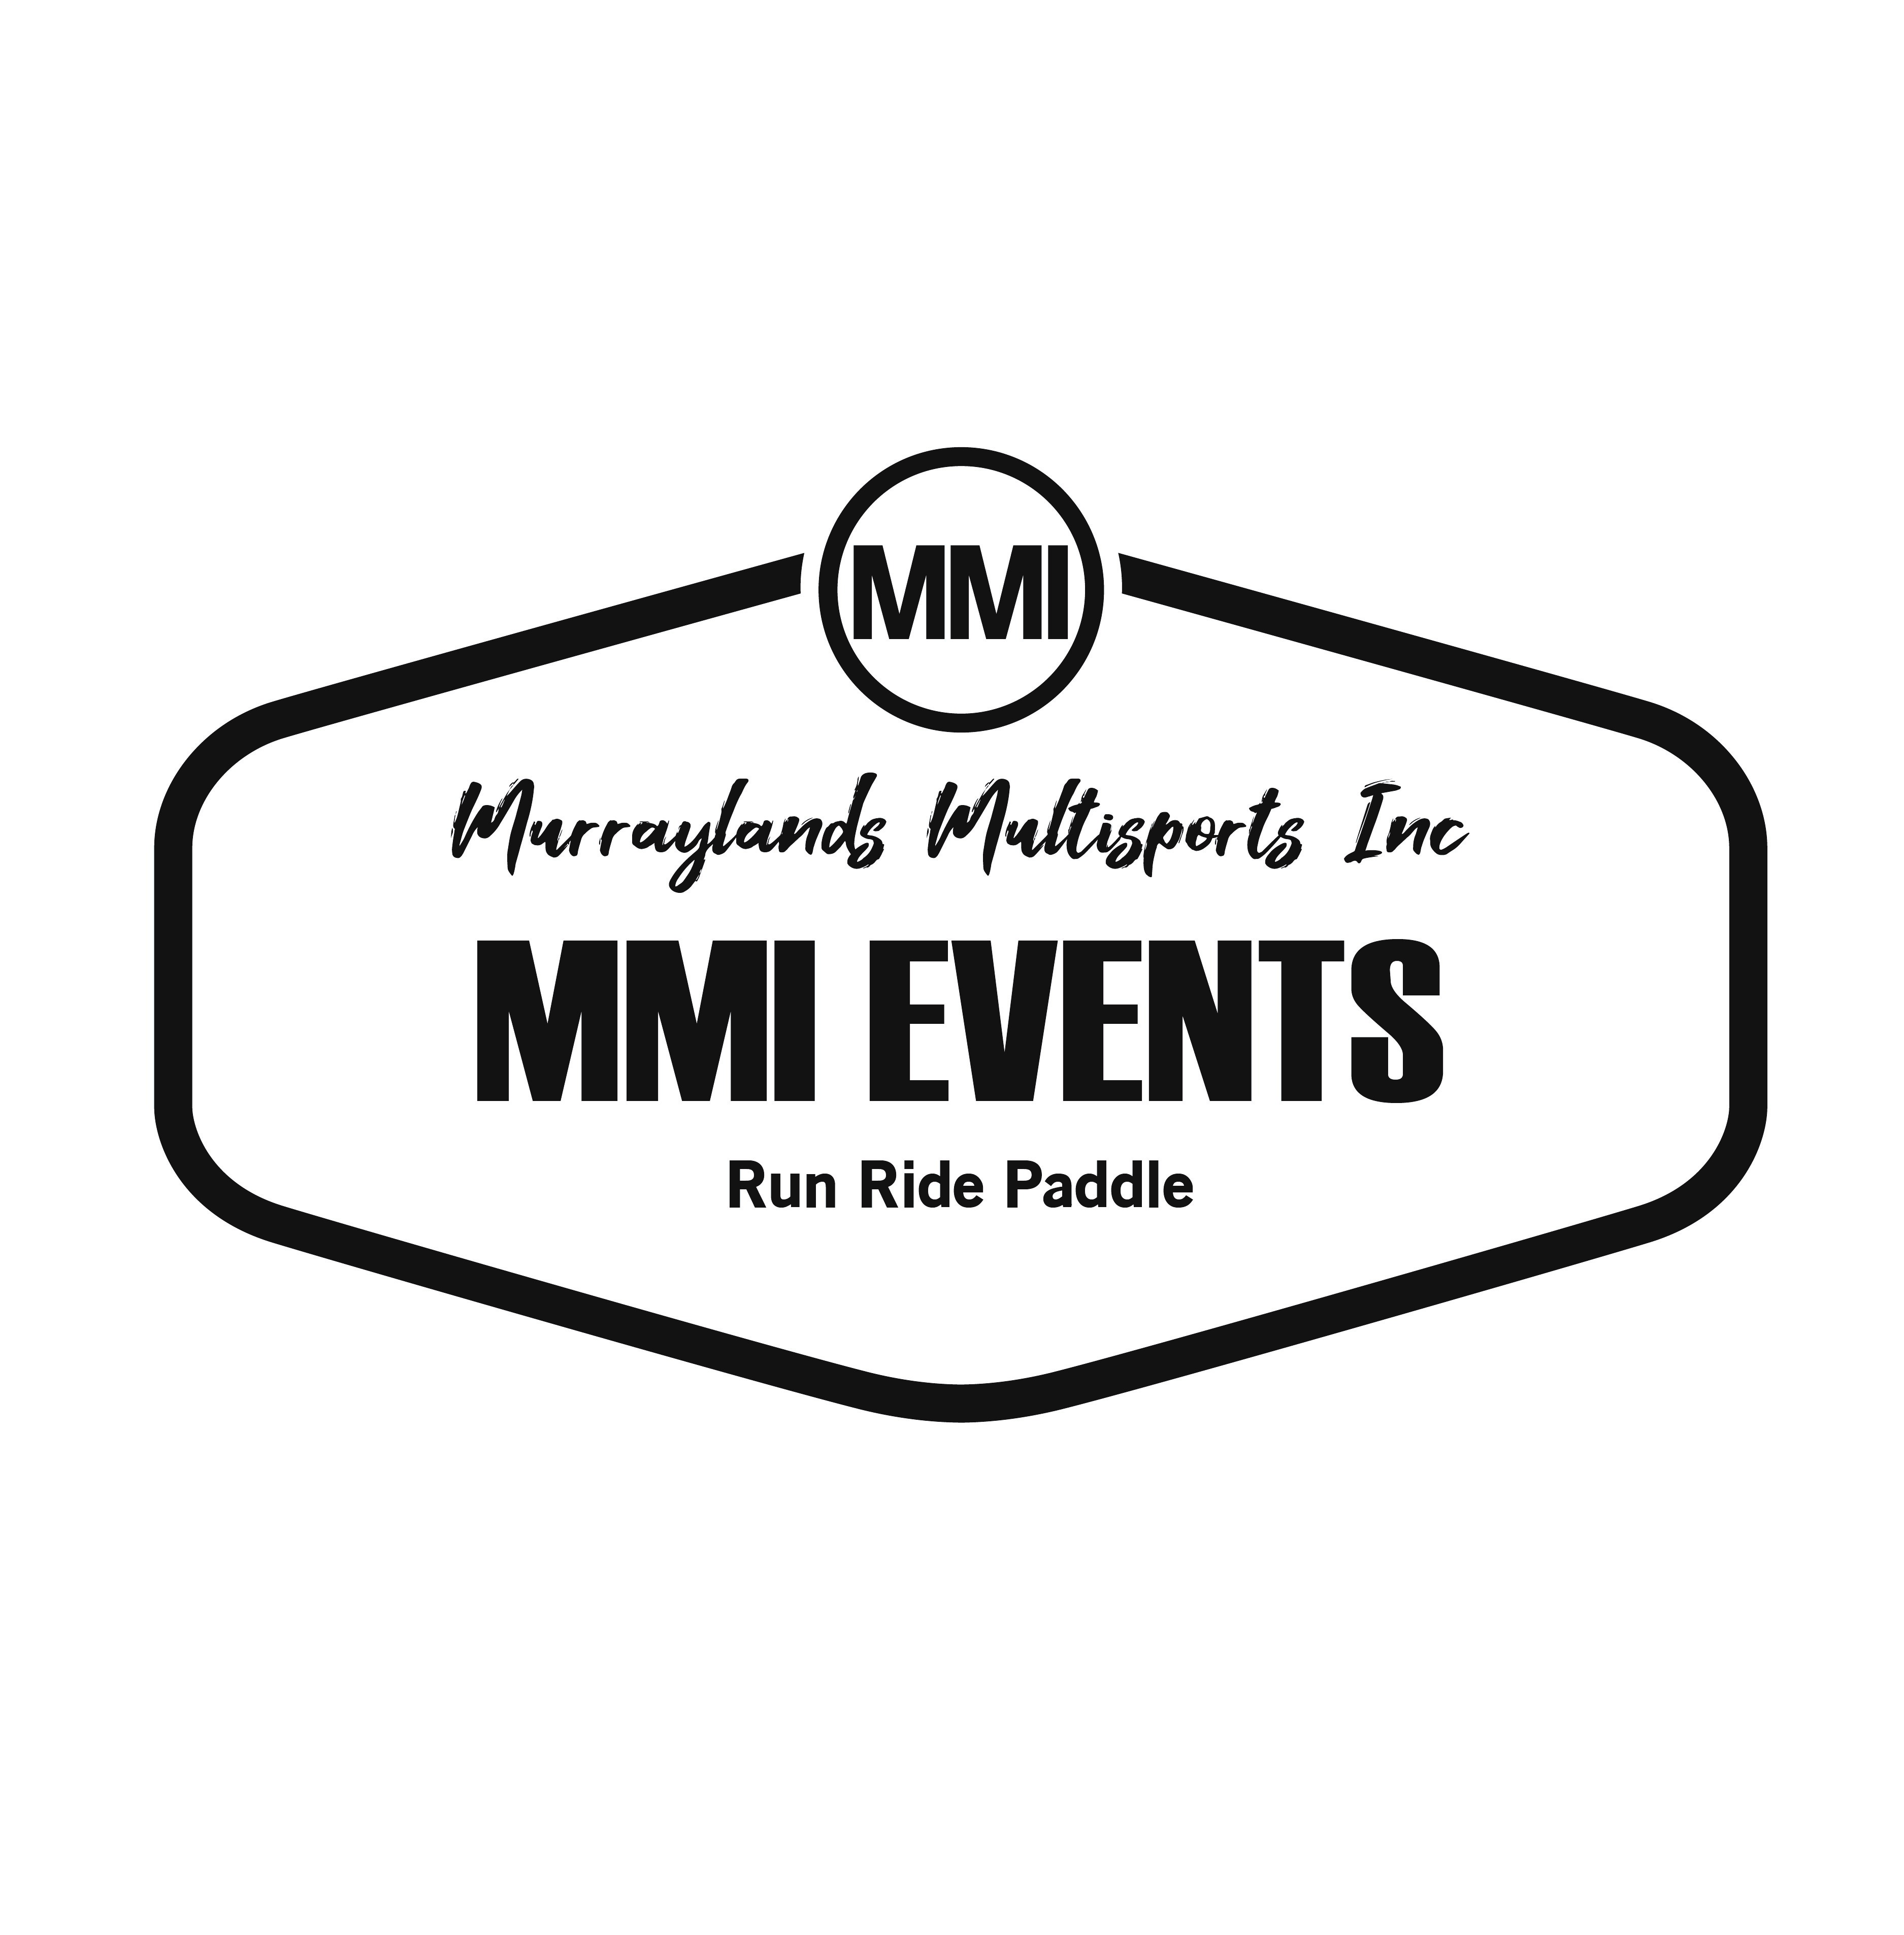 MMI Events